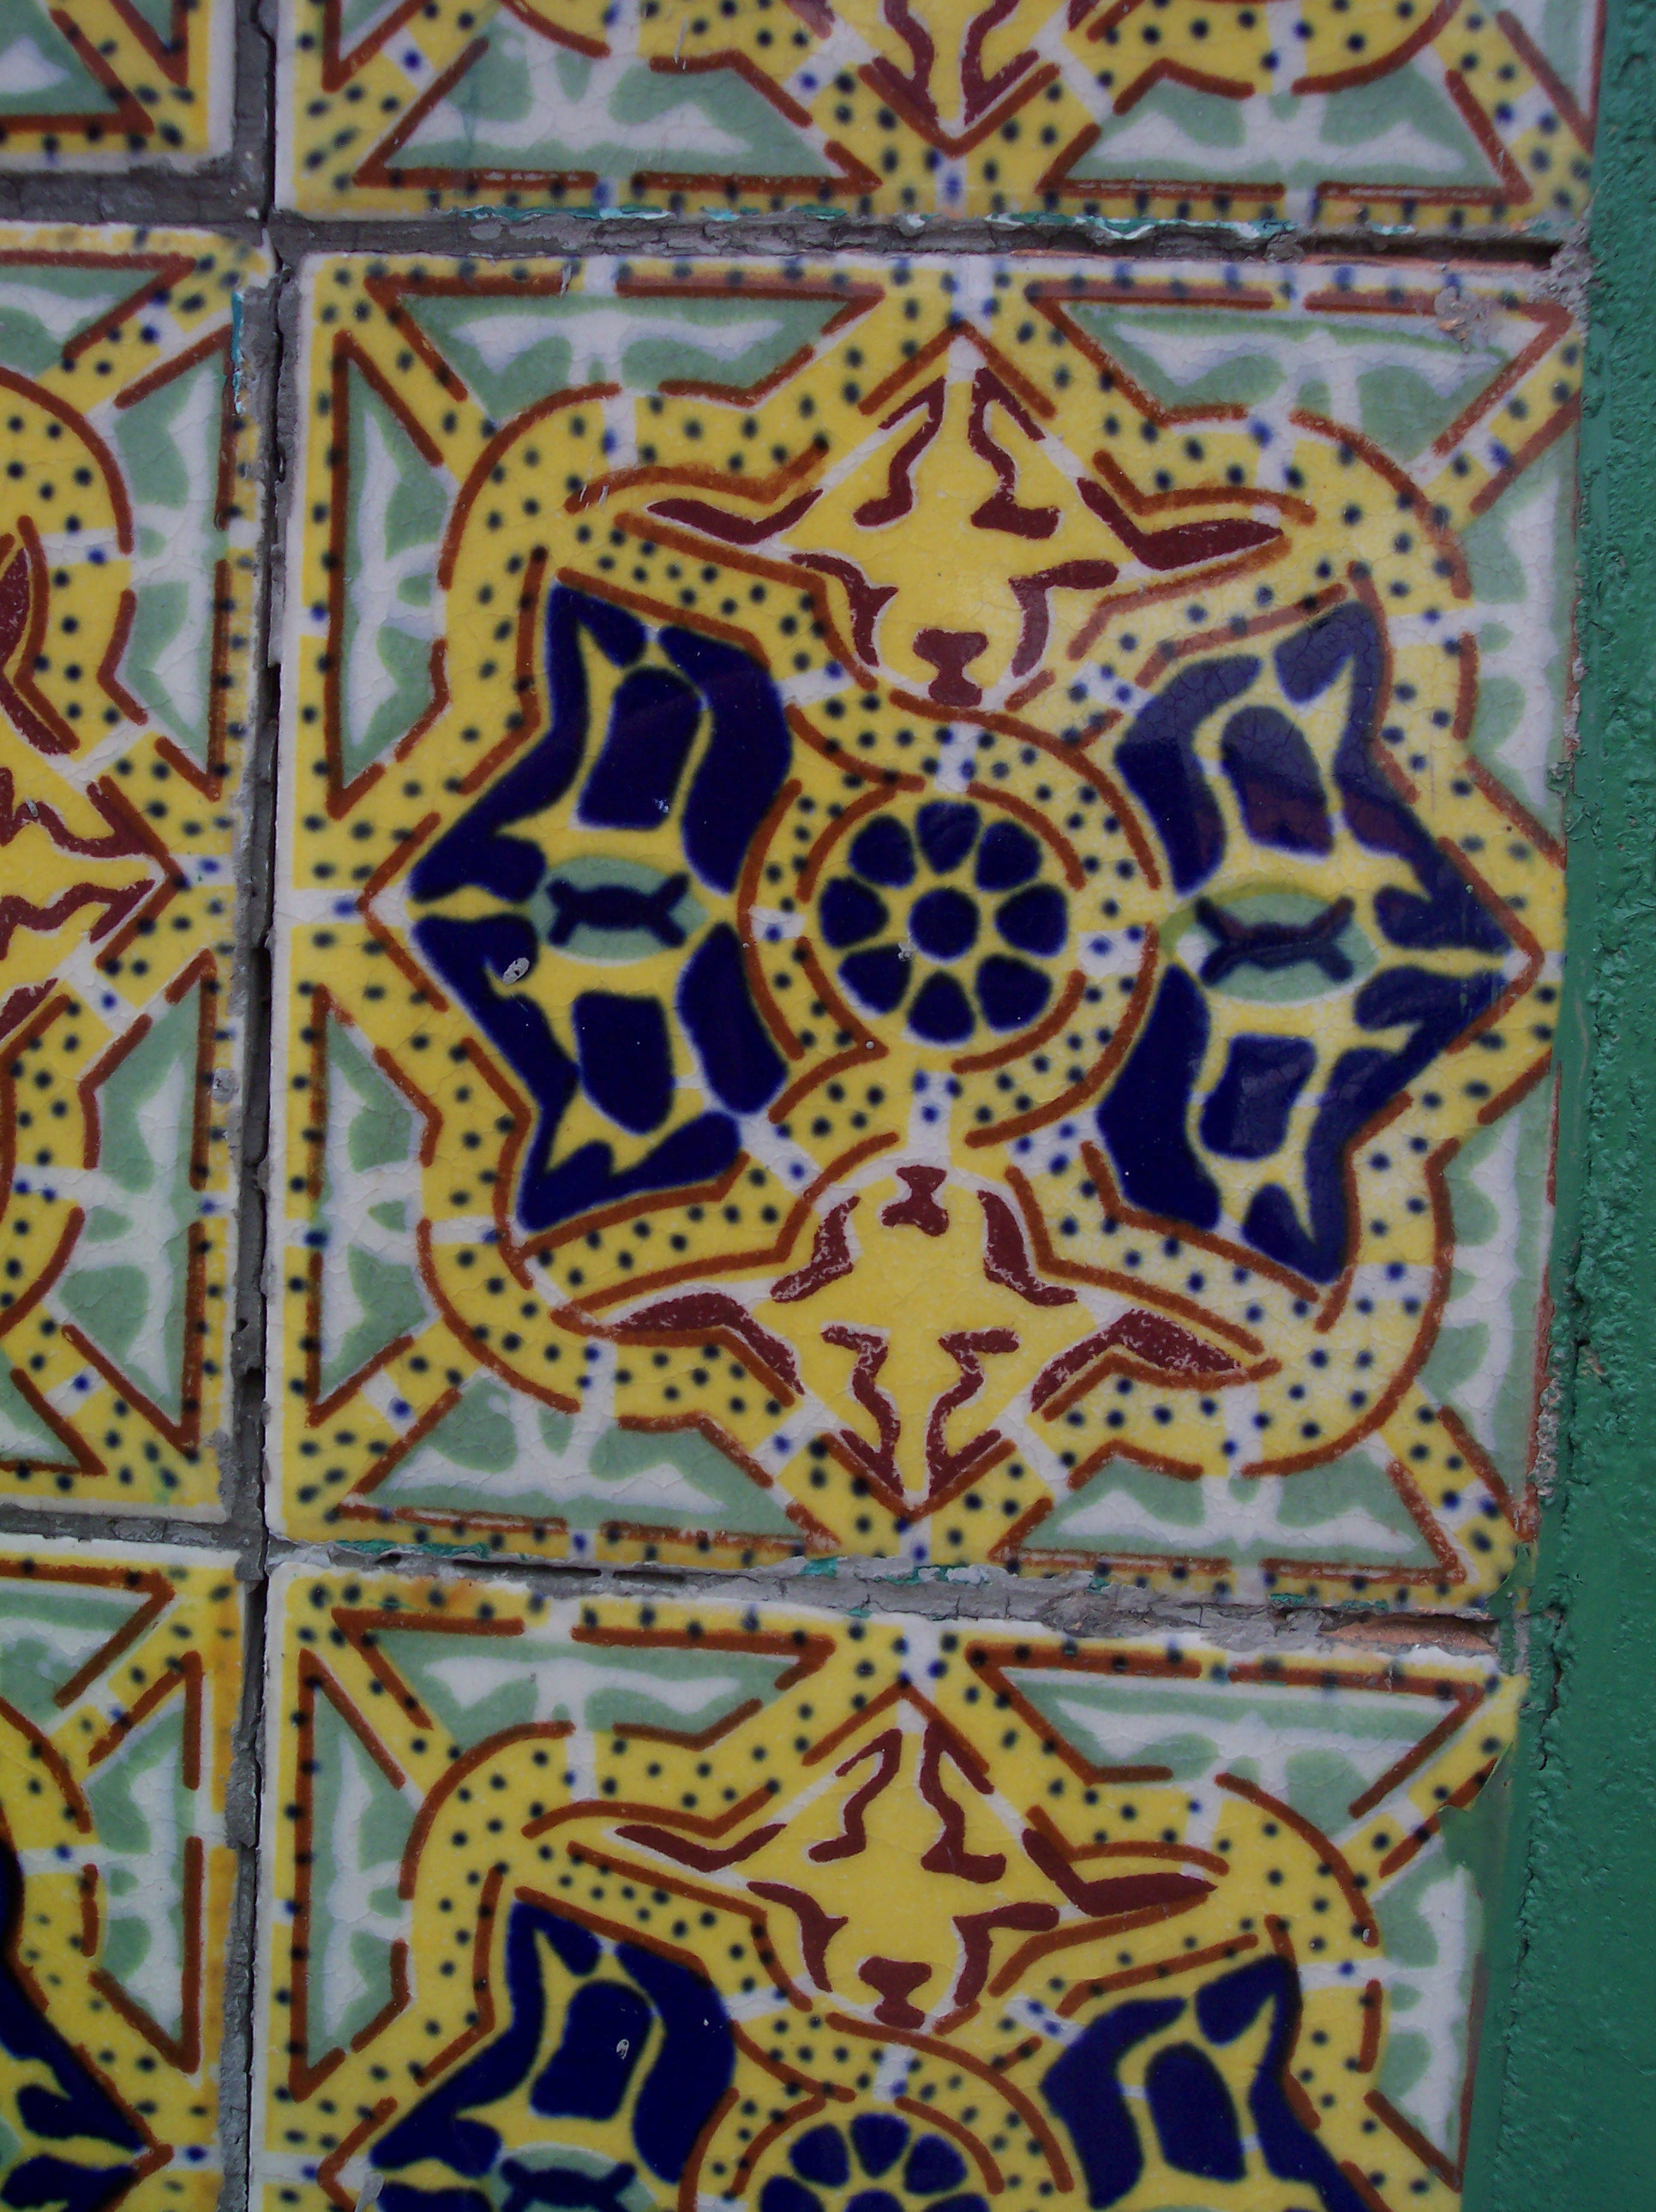 dario tile tiles decoration art shield yellow blue painted